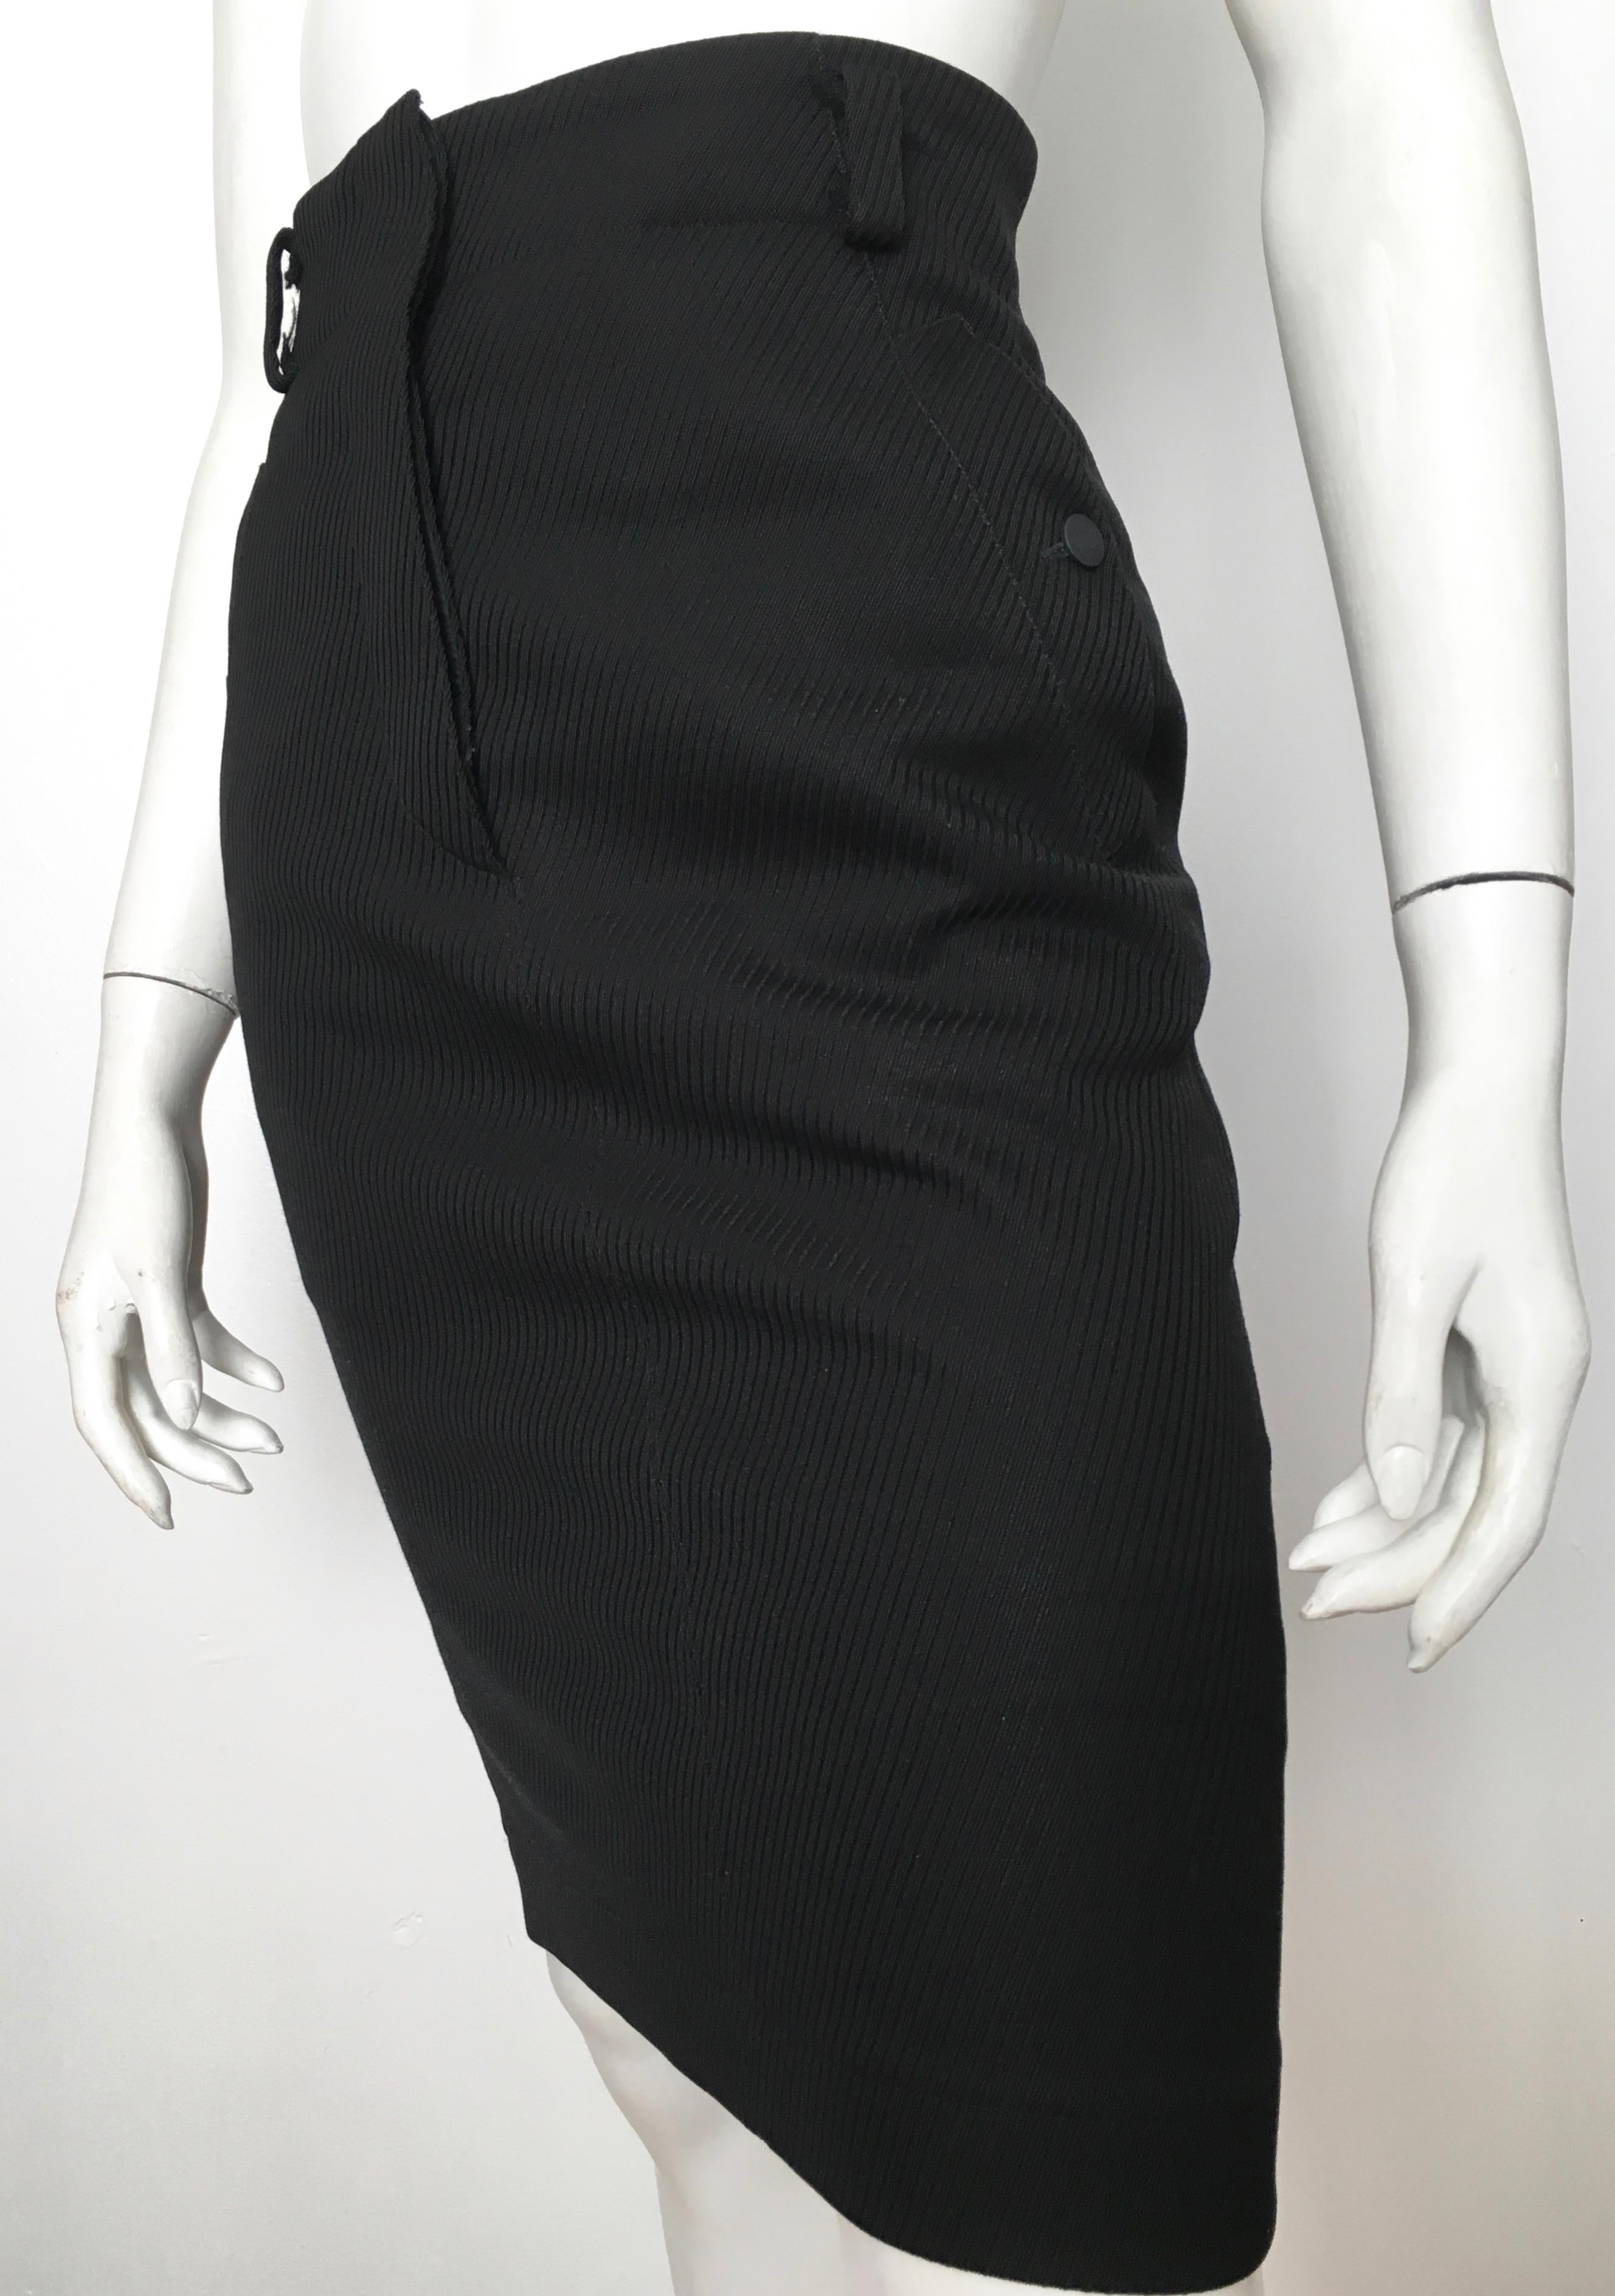 Azzedine Alaia 1980s Black Pencil Skirt with Pockets Size 4. 6